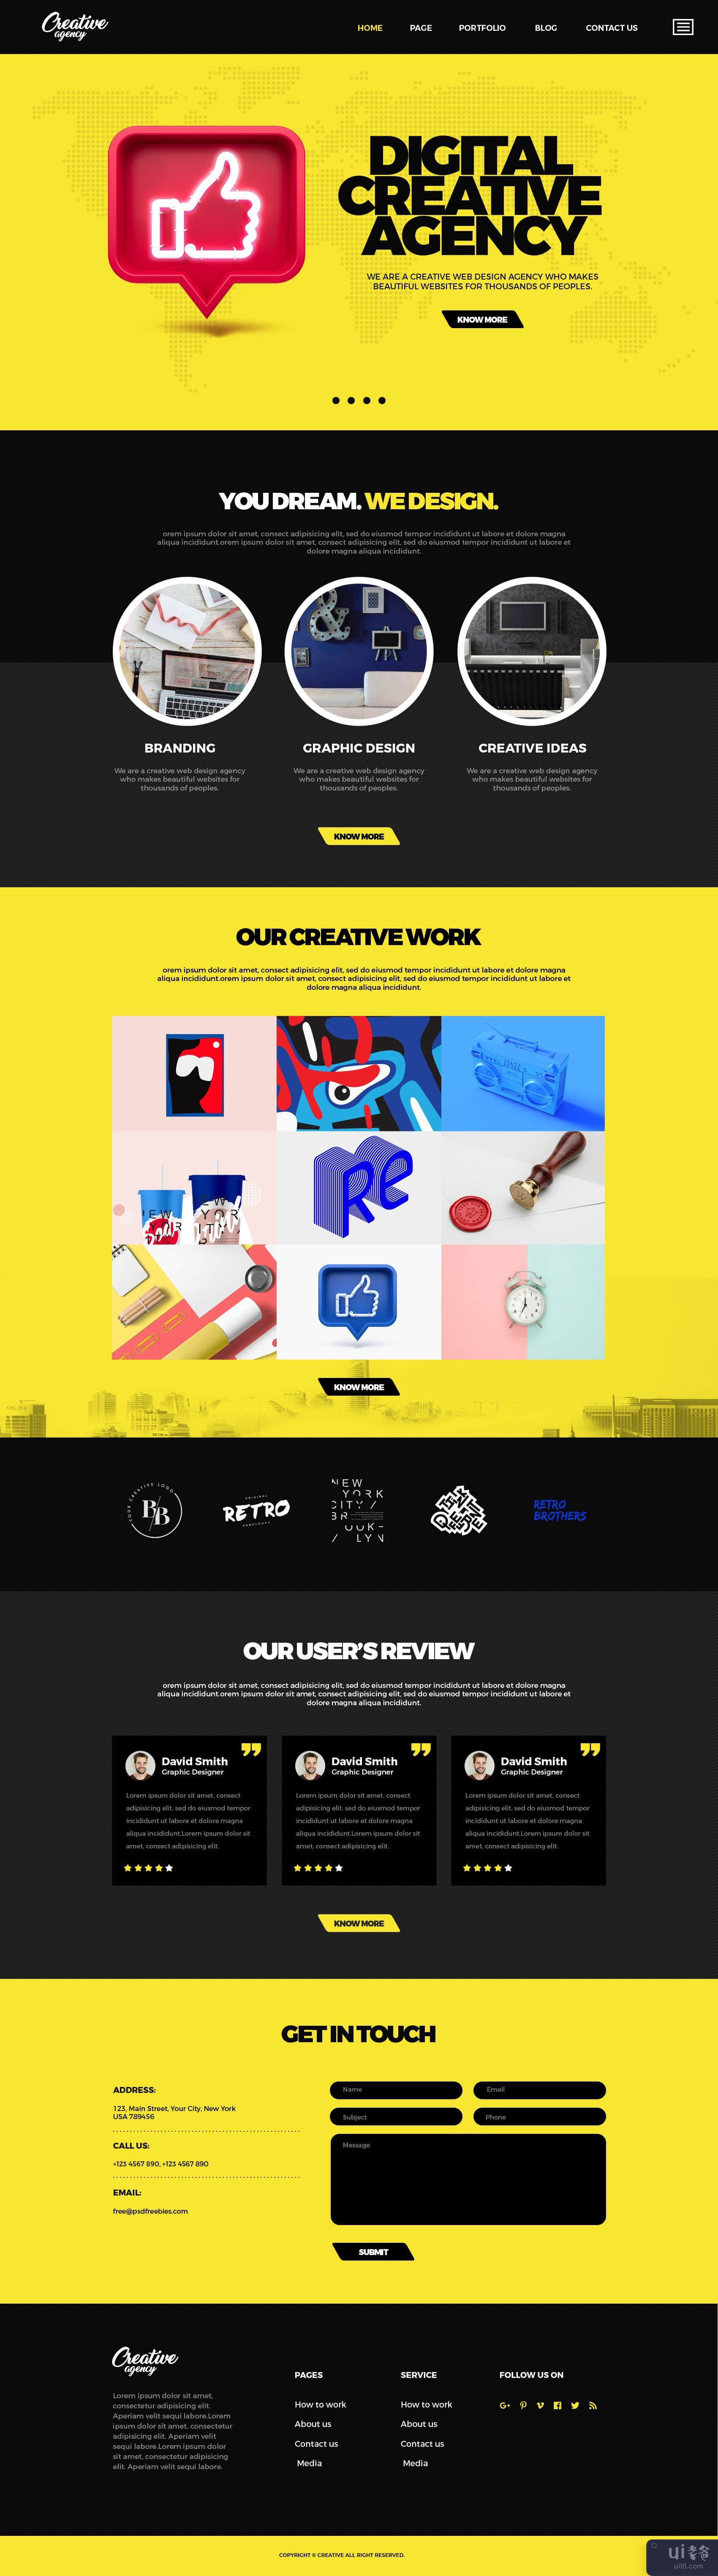 新创意的新创意机构网页模板(new creative agency web template for new creativity)插图